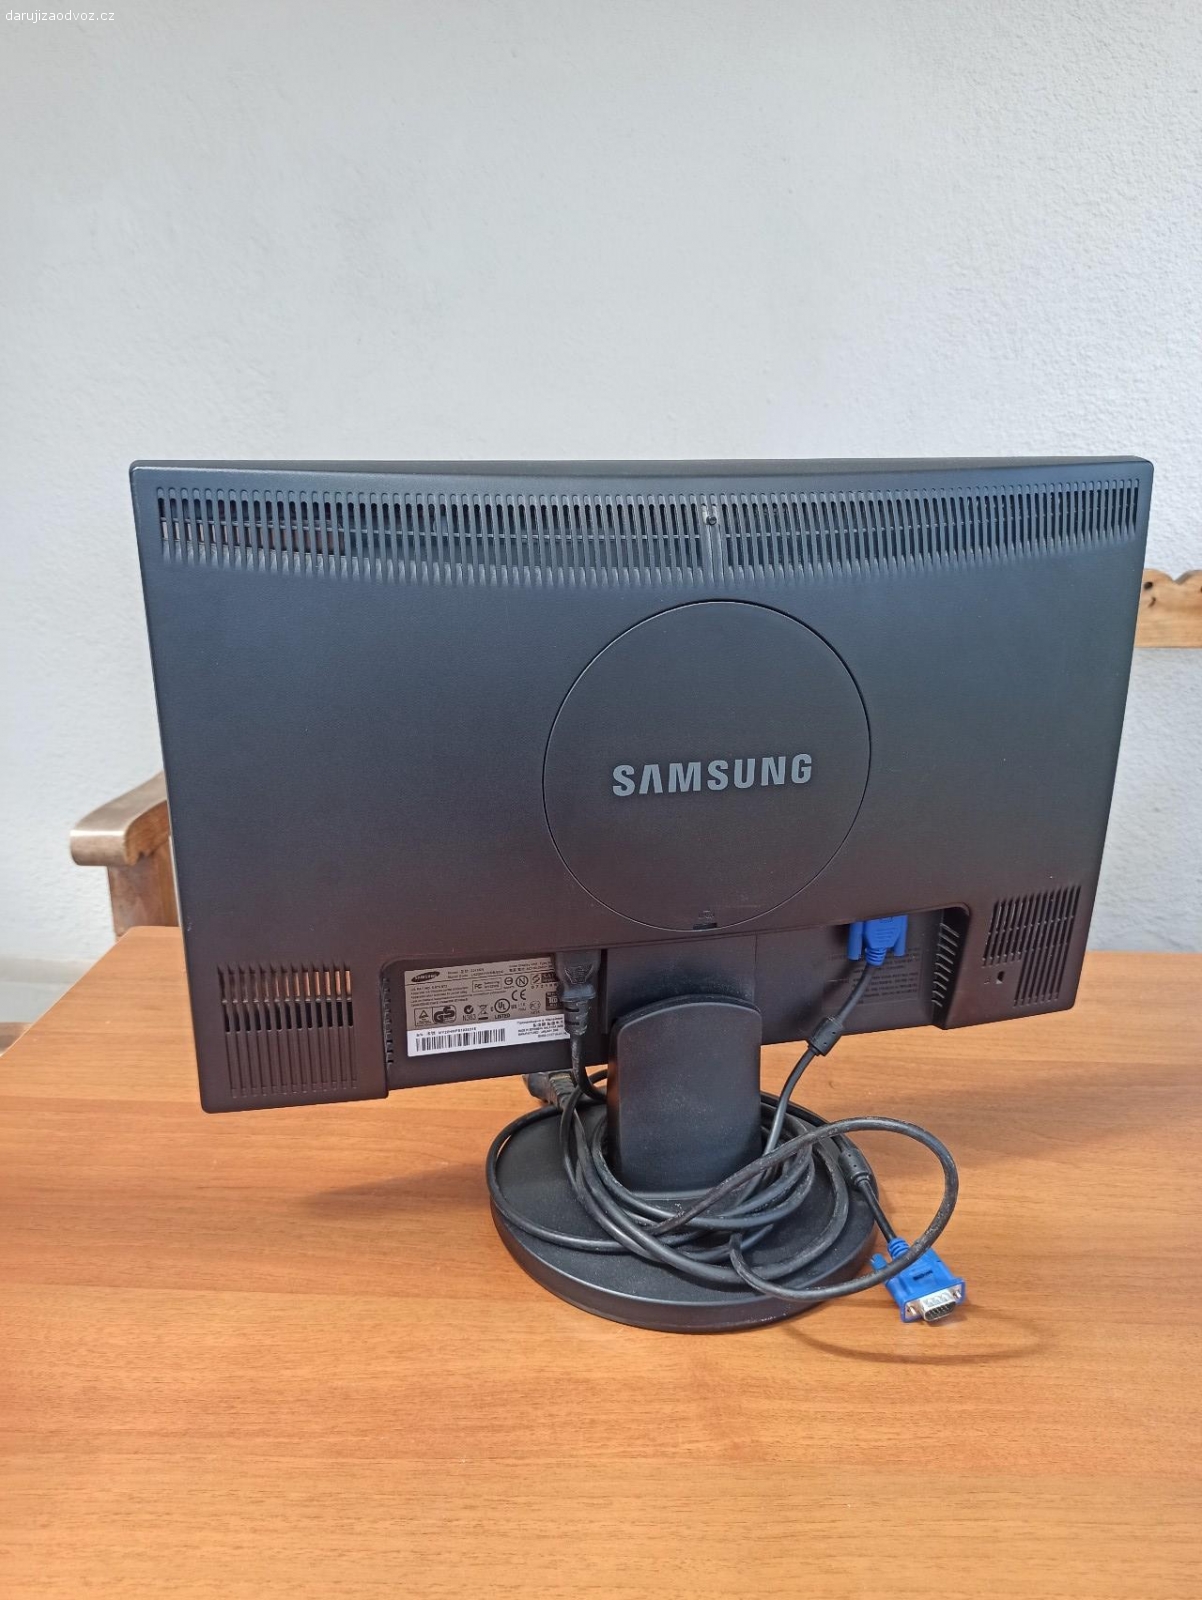 Samsung Monitor 24